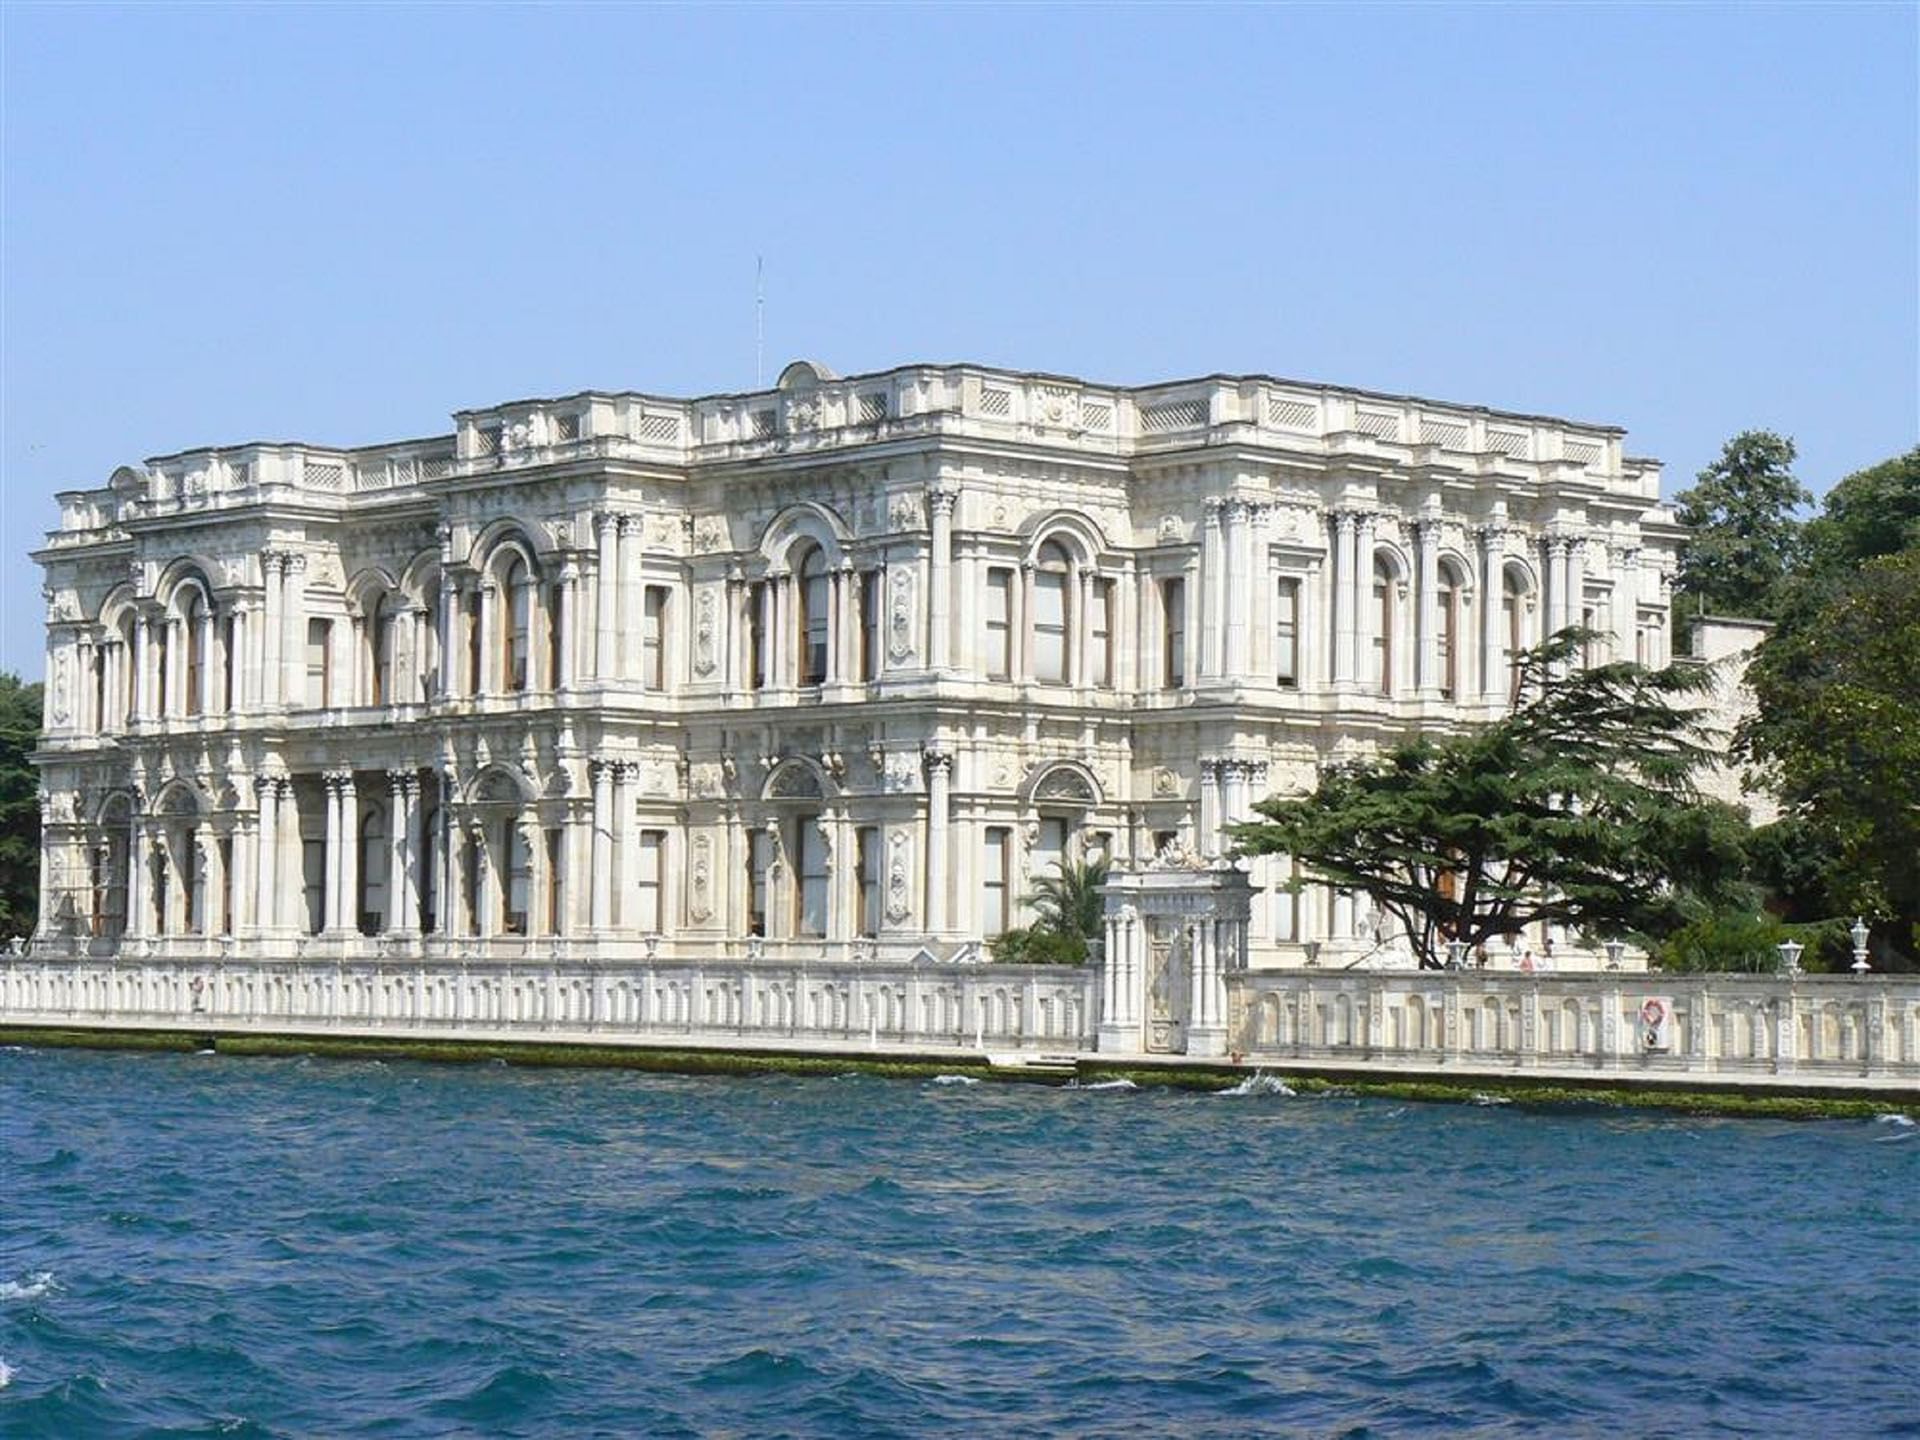  Beylerbeyi Palace